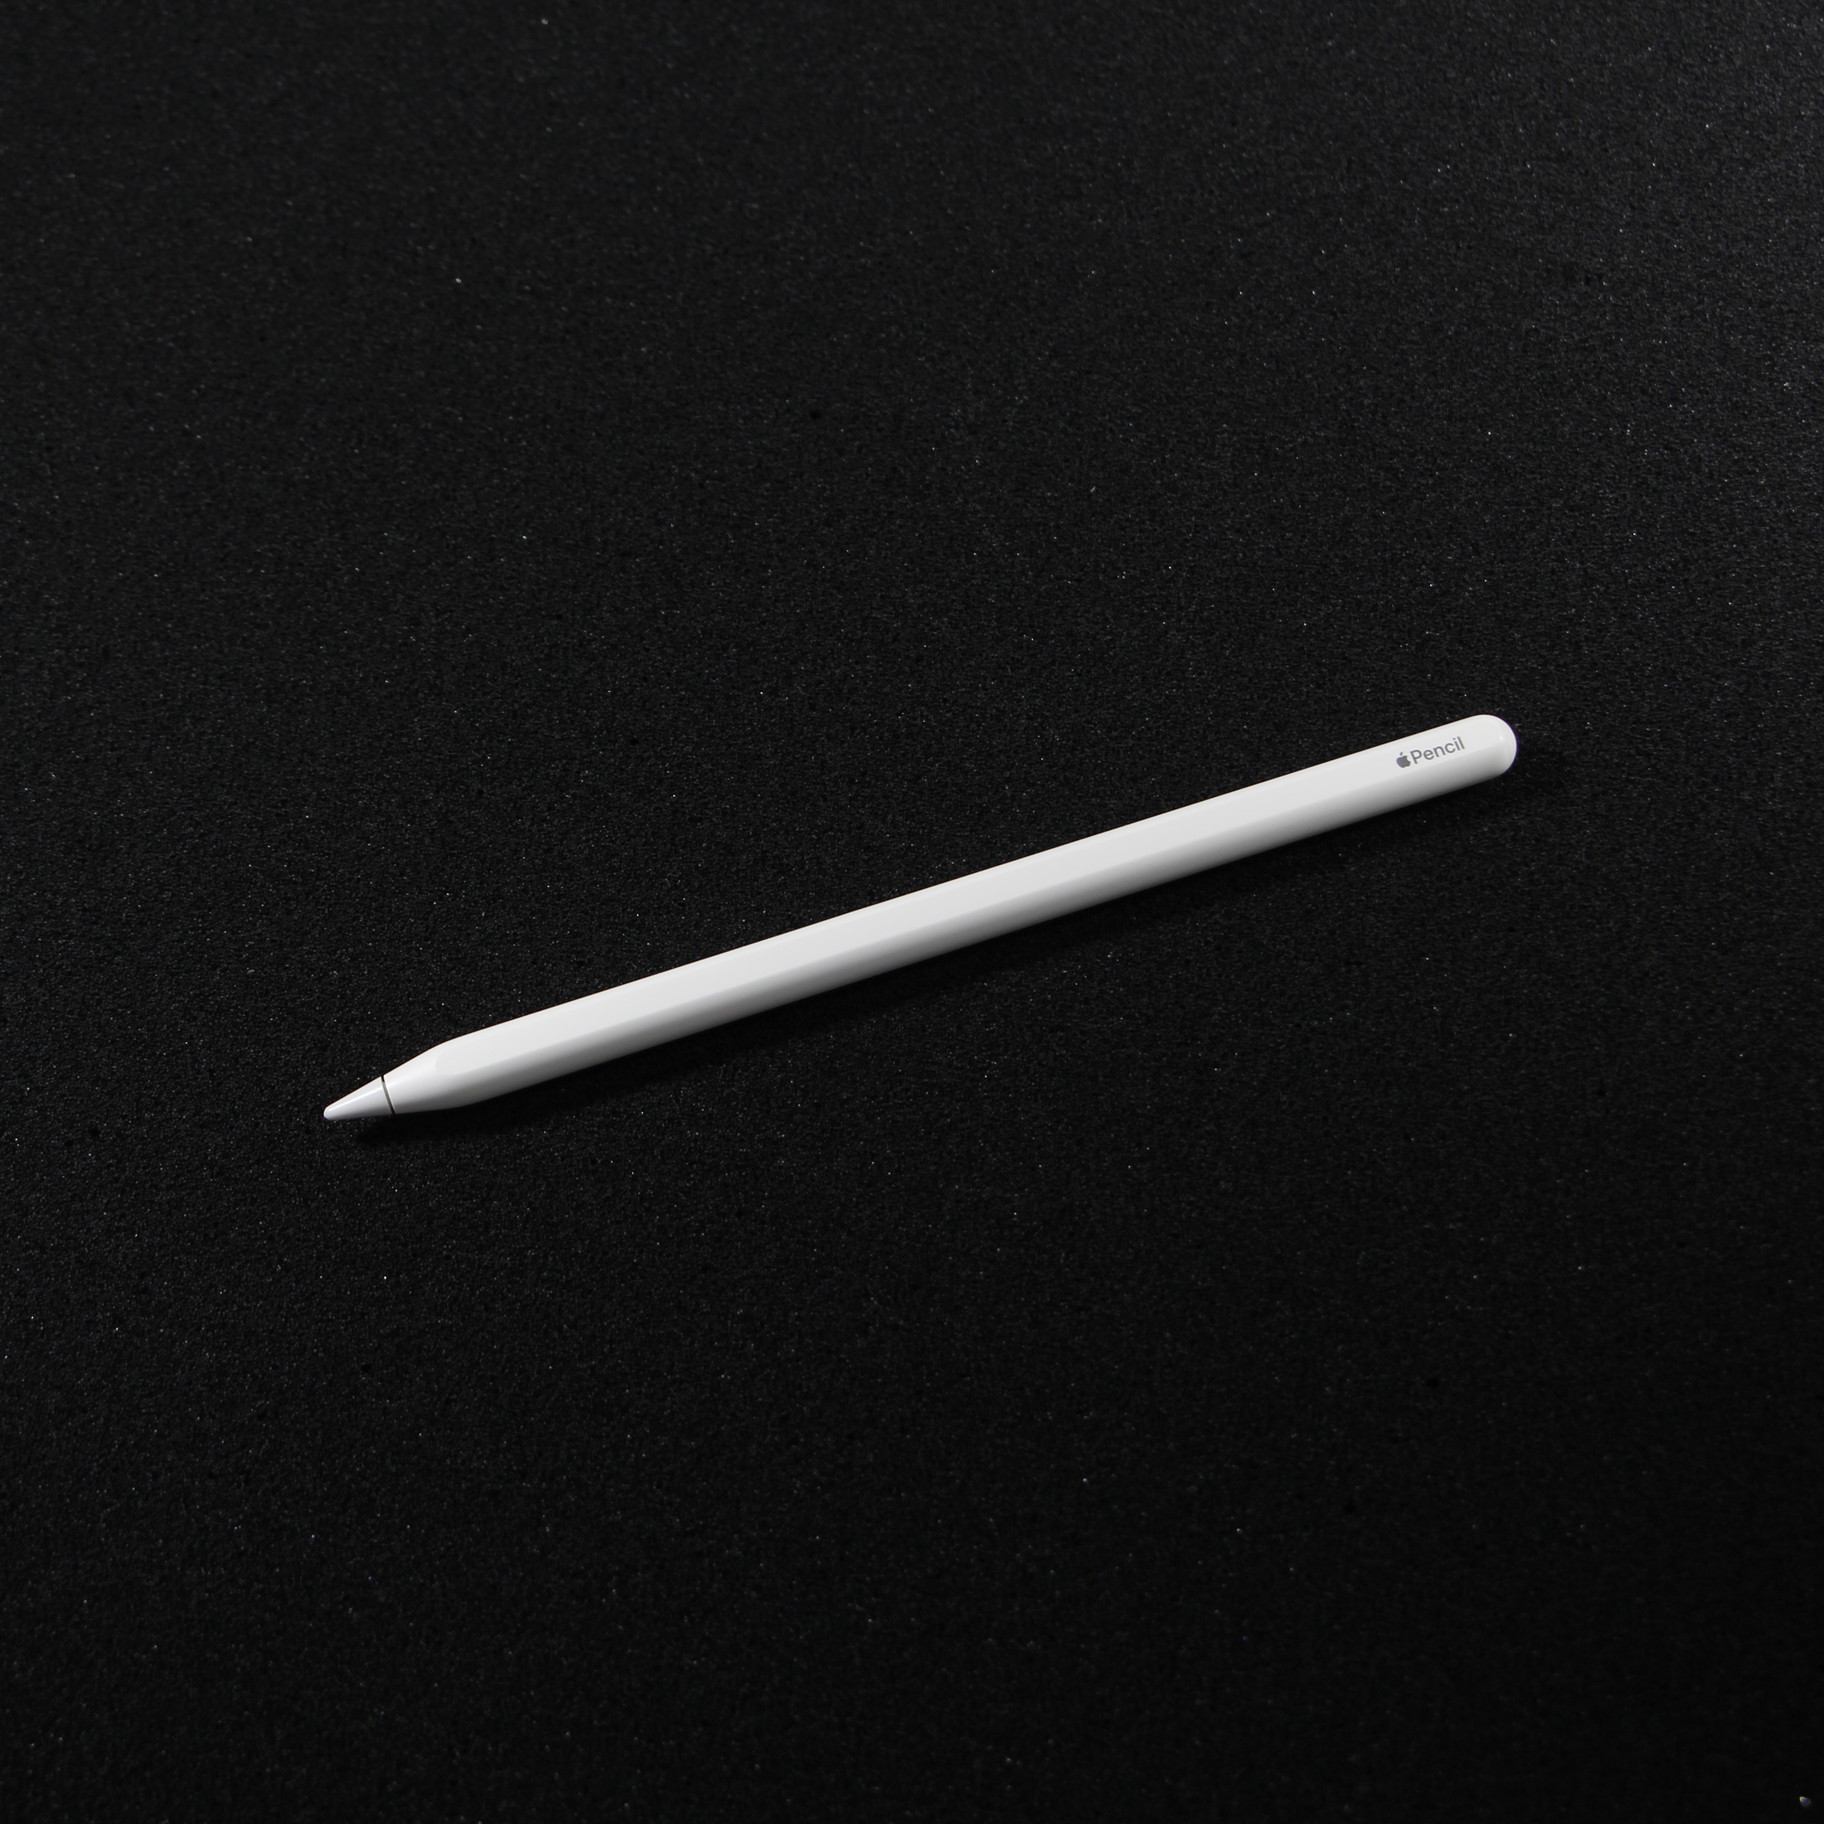 www.haoming.jp - Apple Pencil 第2世代 APPLE MU8F2J A 価格比較